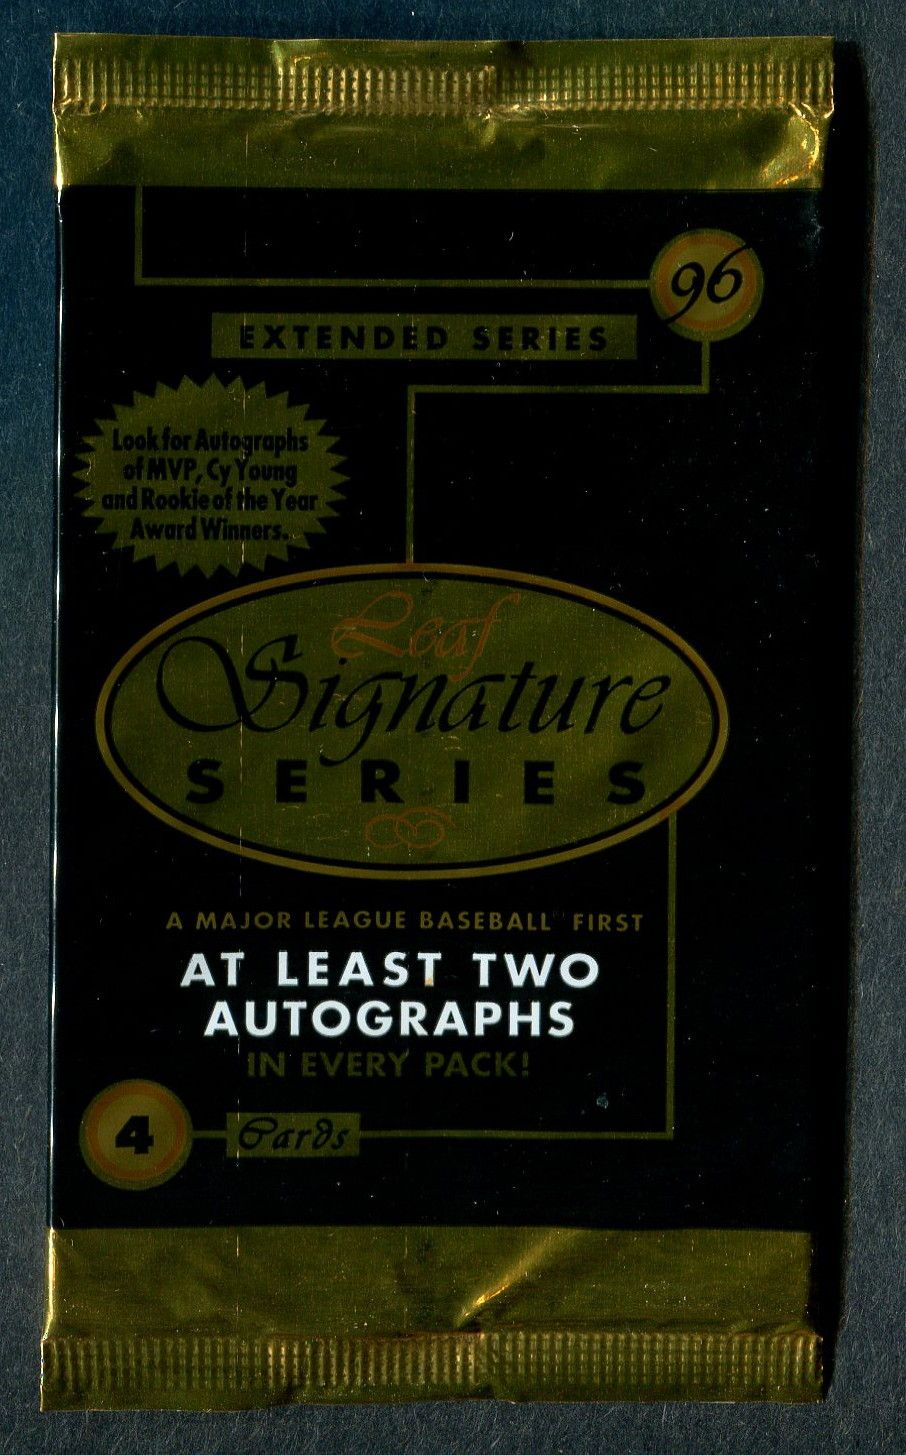 1996 Leaf Signature Series Baseball Extended Series Unopened Pack